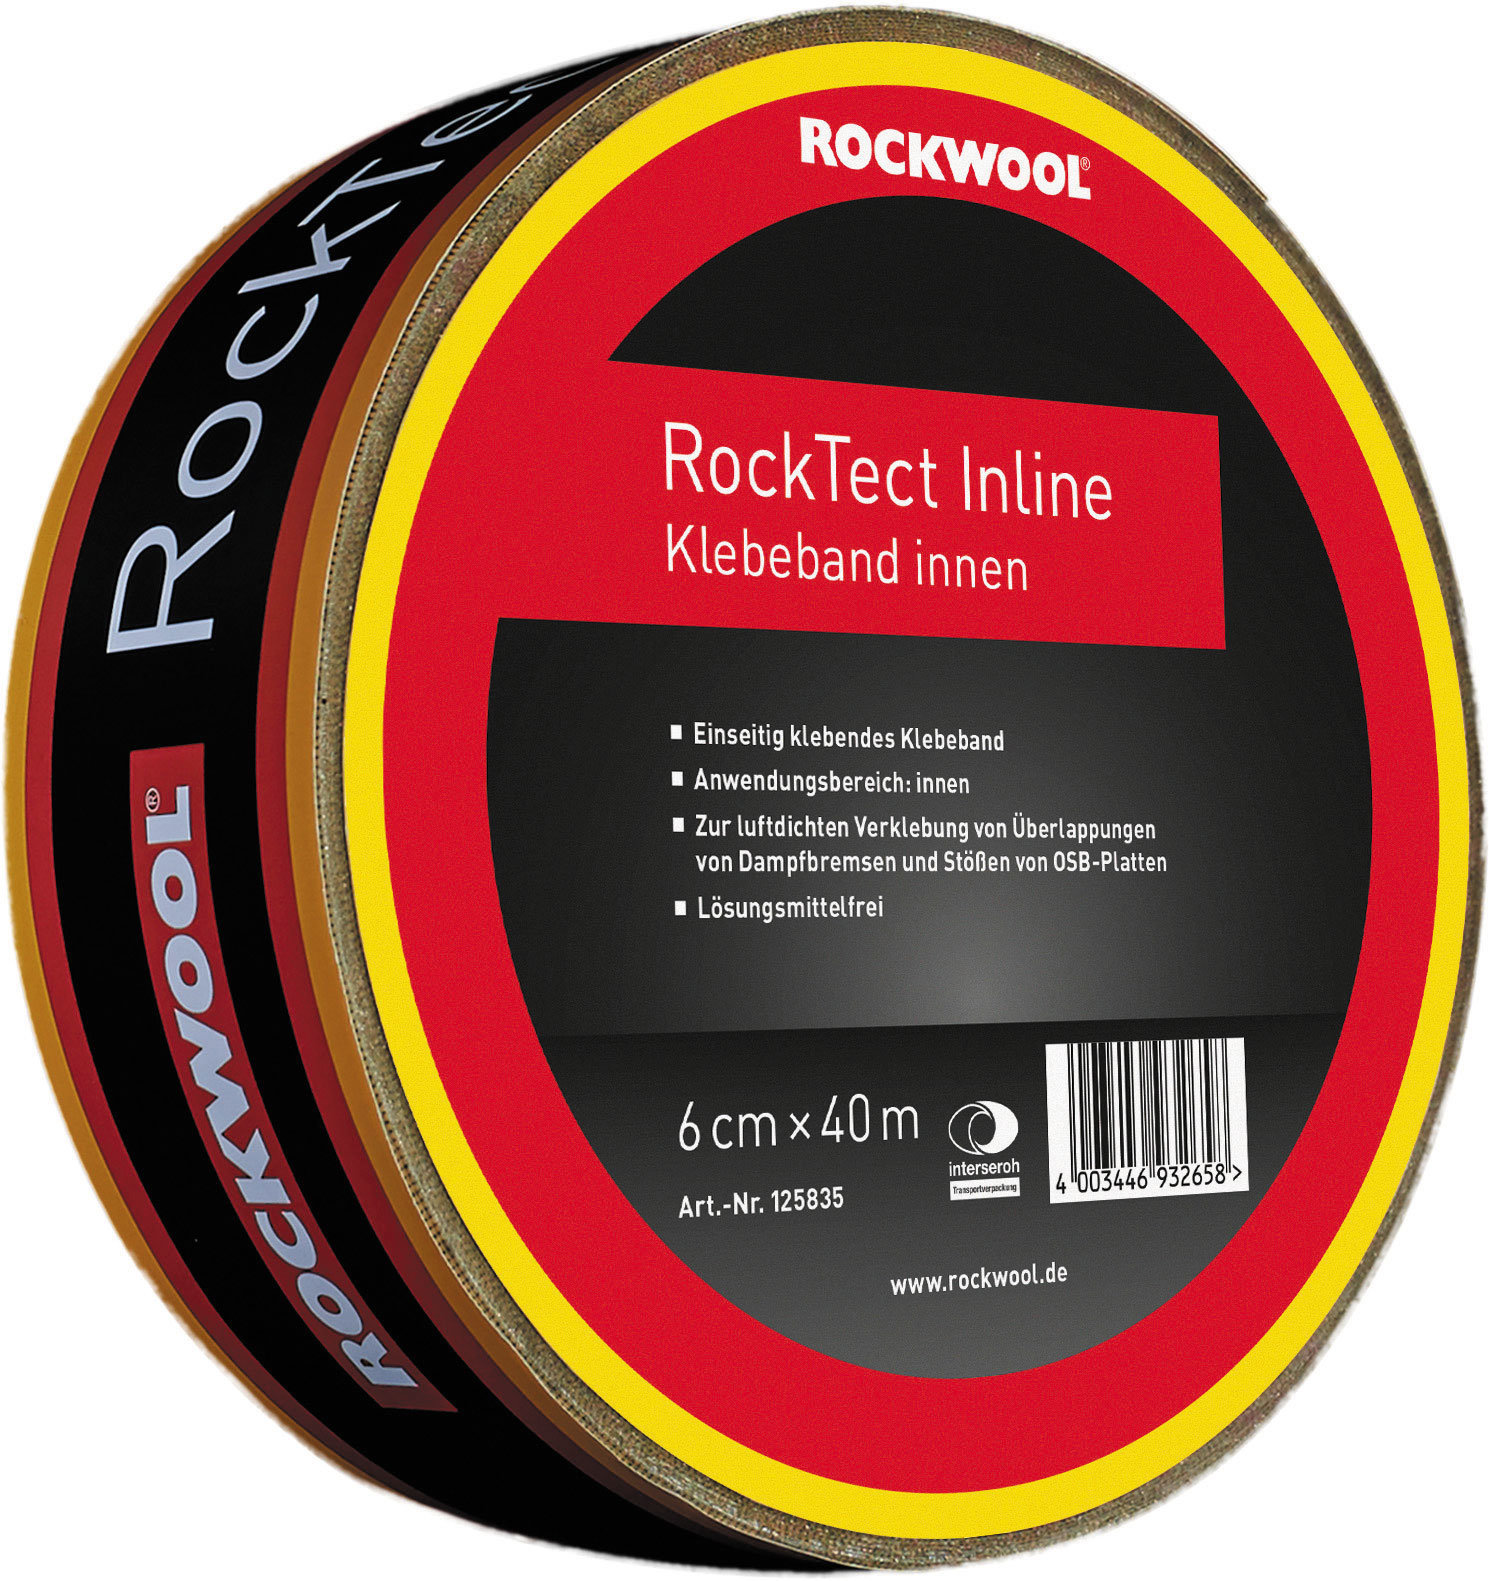 ROCKWOOL RockTect Inline